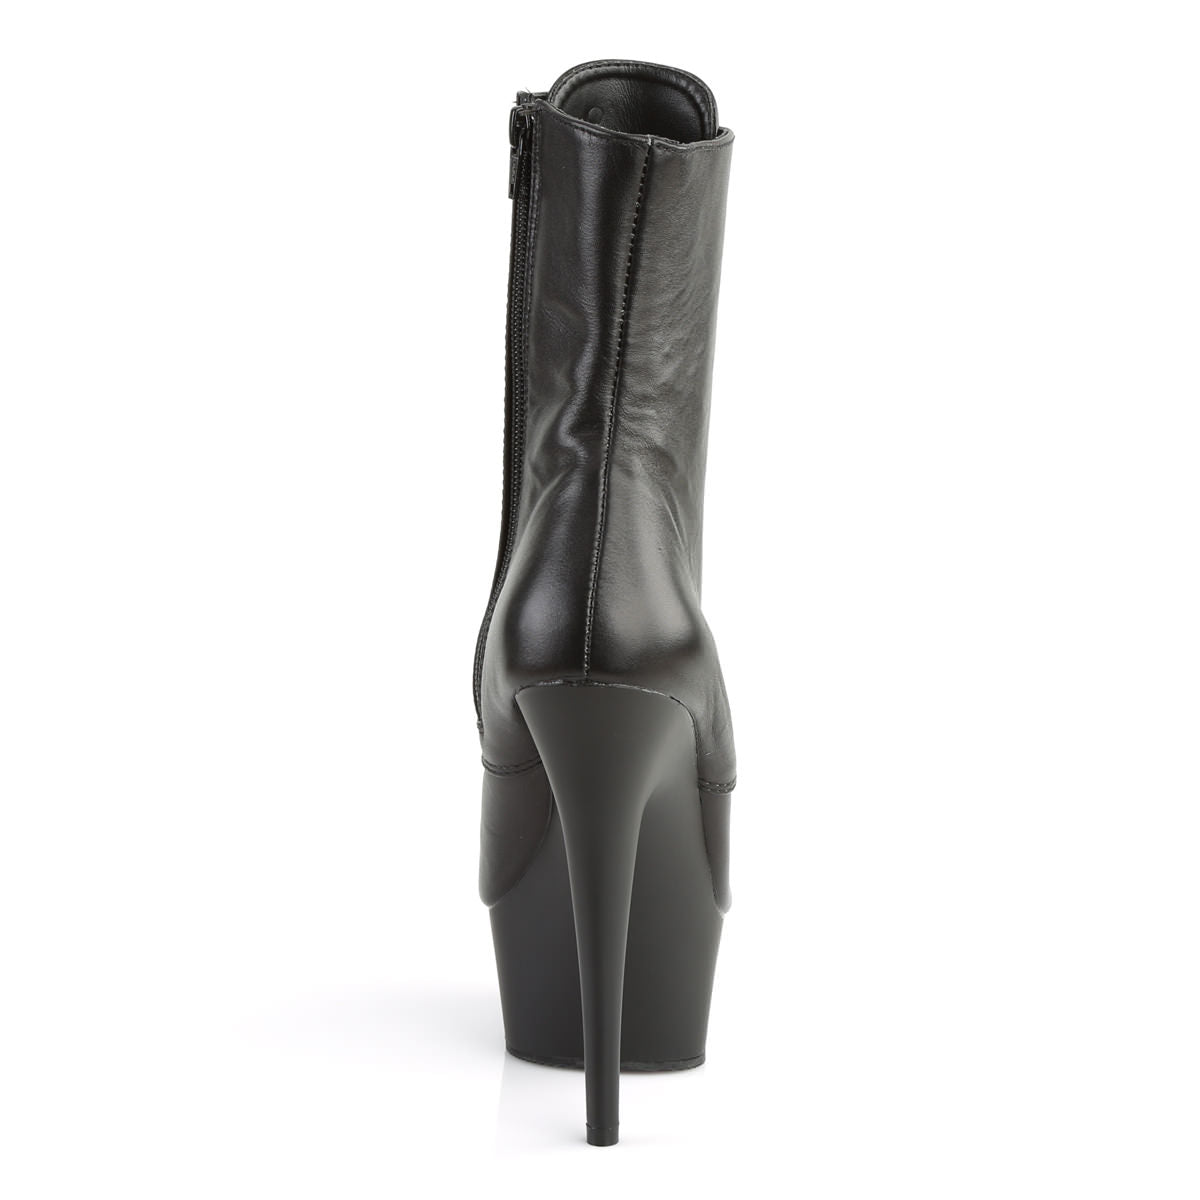 6 Inch Heel DELIGHT-1020 Black Leather – Shoecup.com